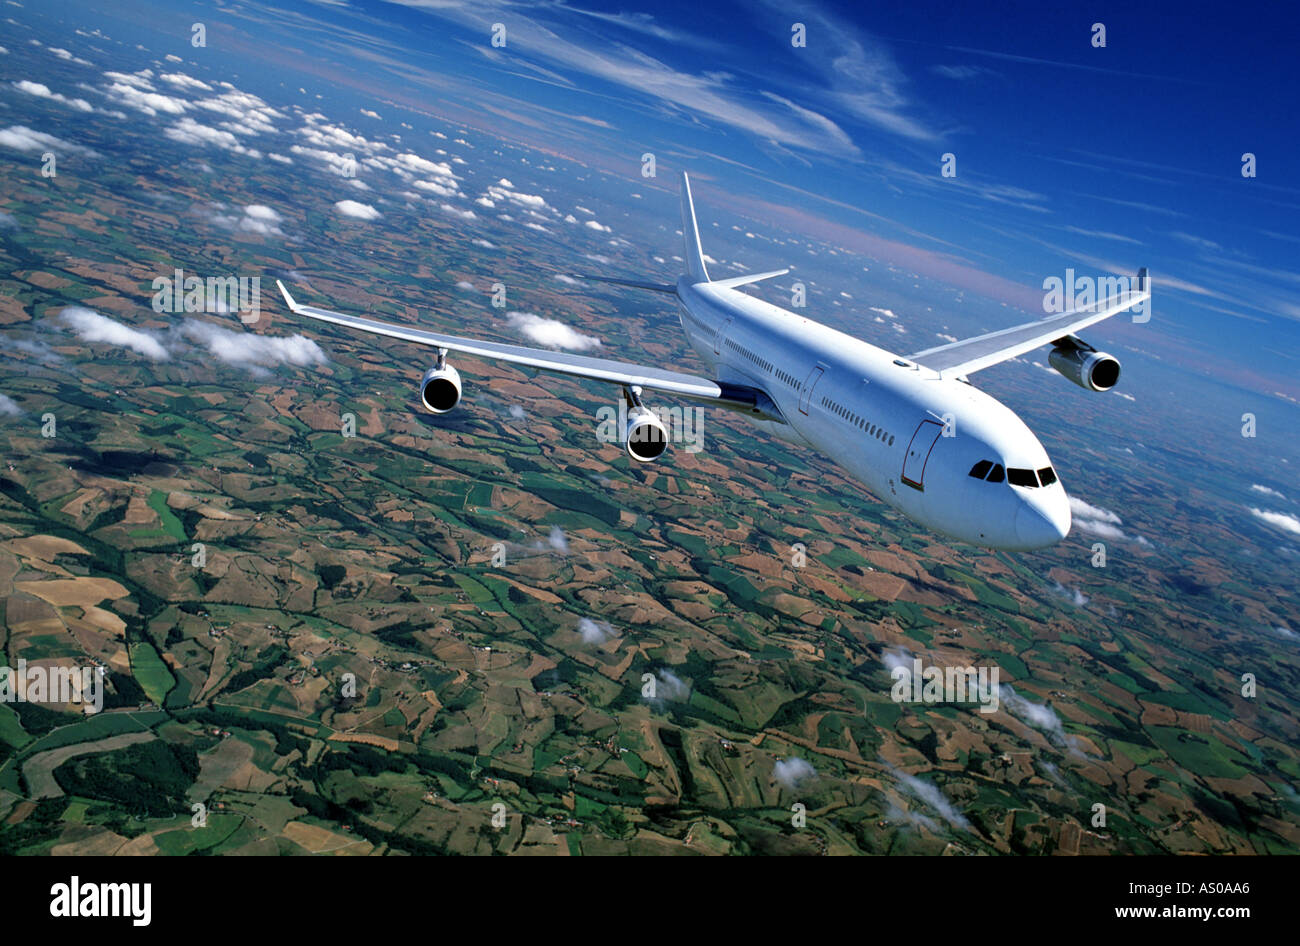 passenger aircraft in flight Airbus A340 passenger aircraft Stock Photo